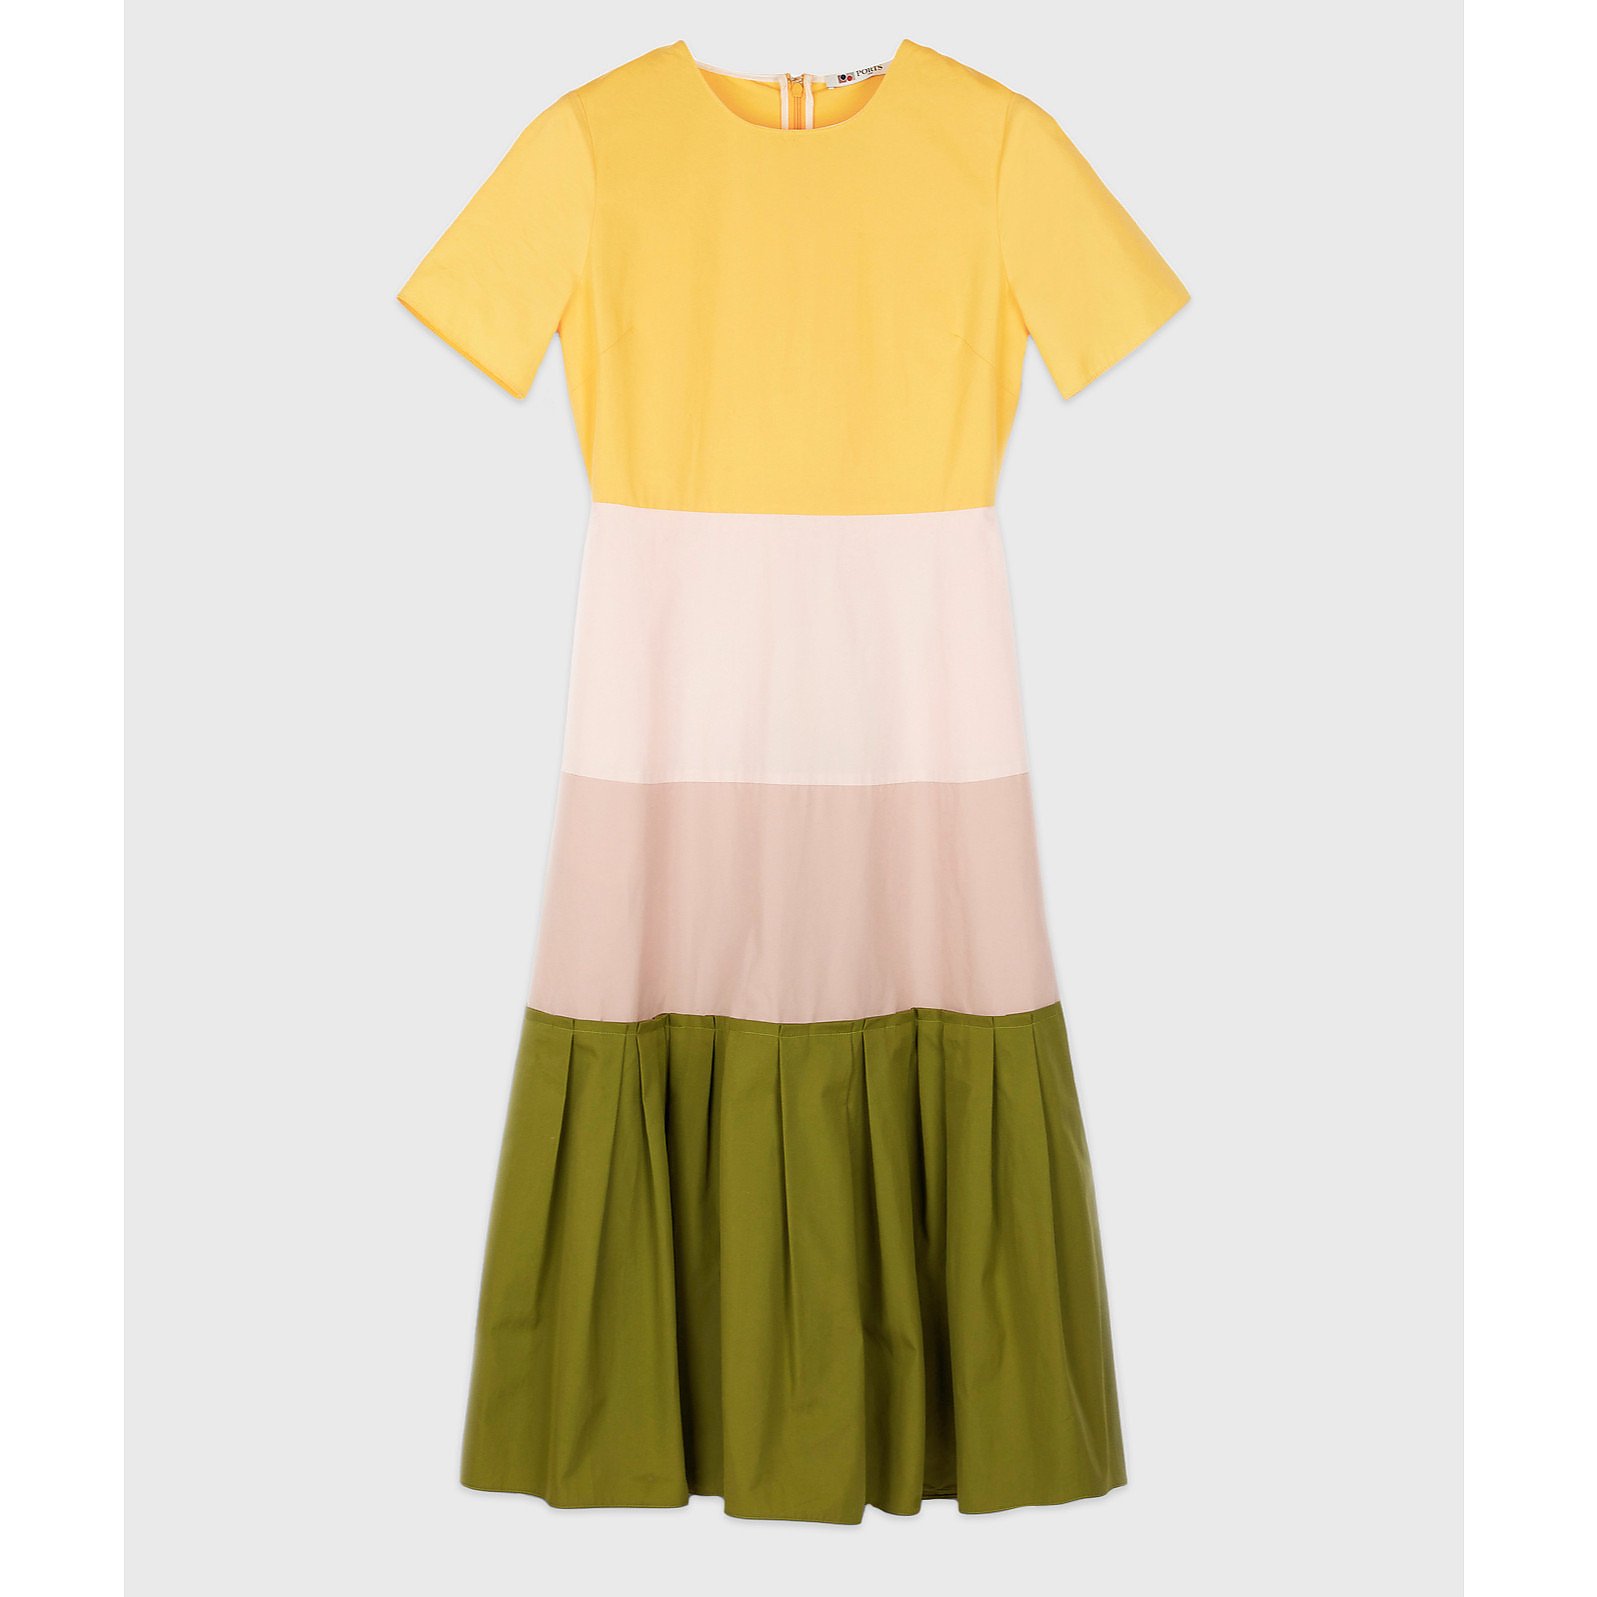 PORTS 1961 Short Sleeve Colour Block Dress